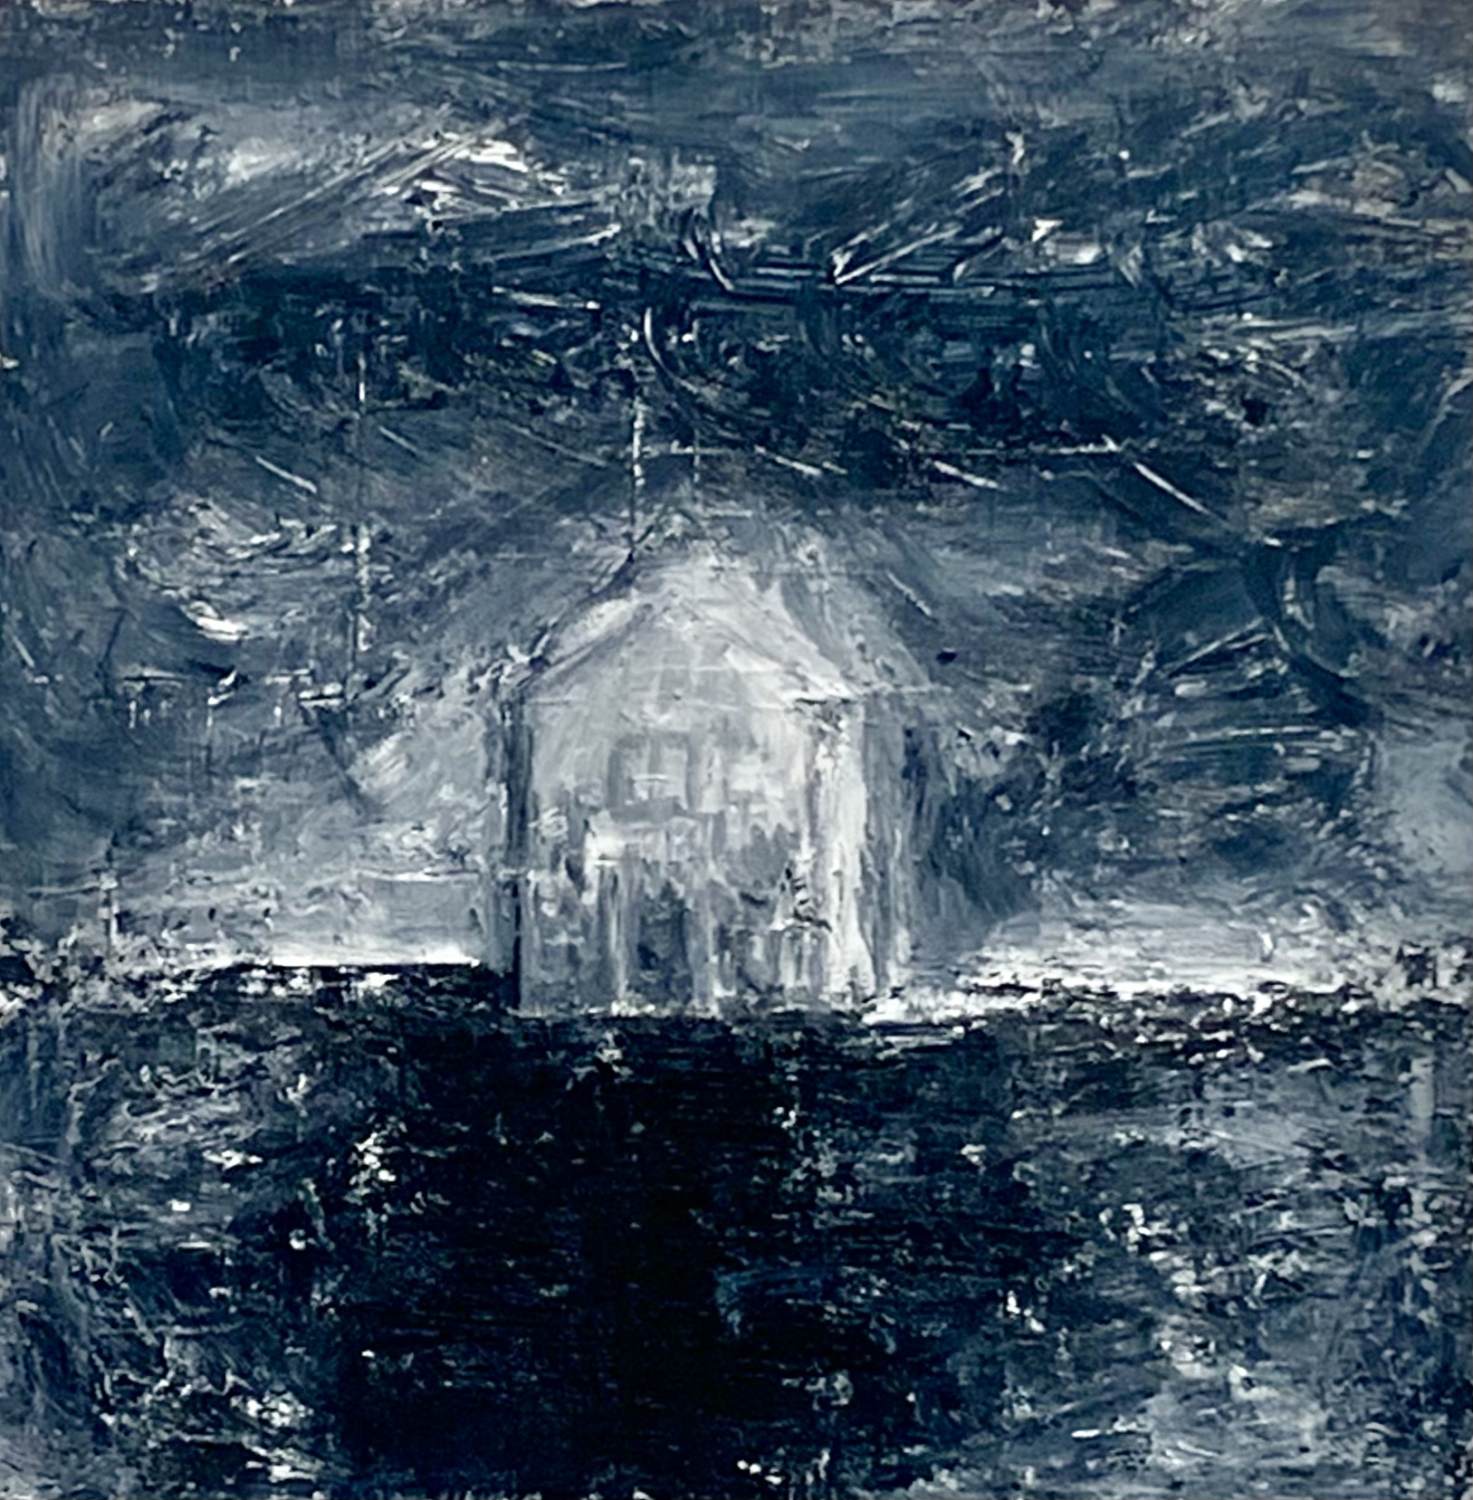 ernie-klinger-dark-waters-3-monochrome-art-abstract-landscape-online-gallery